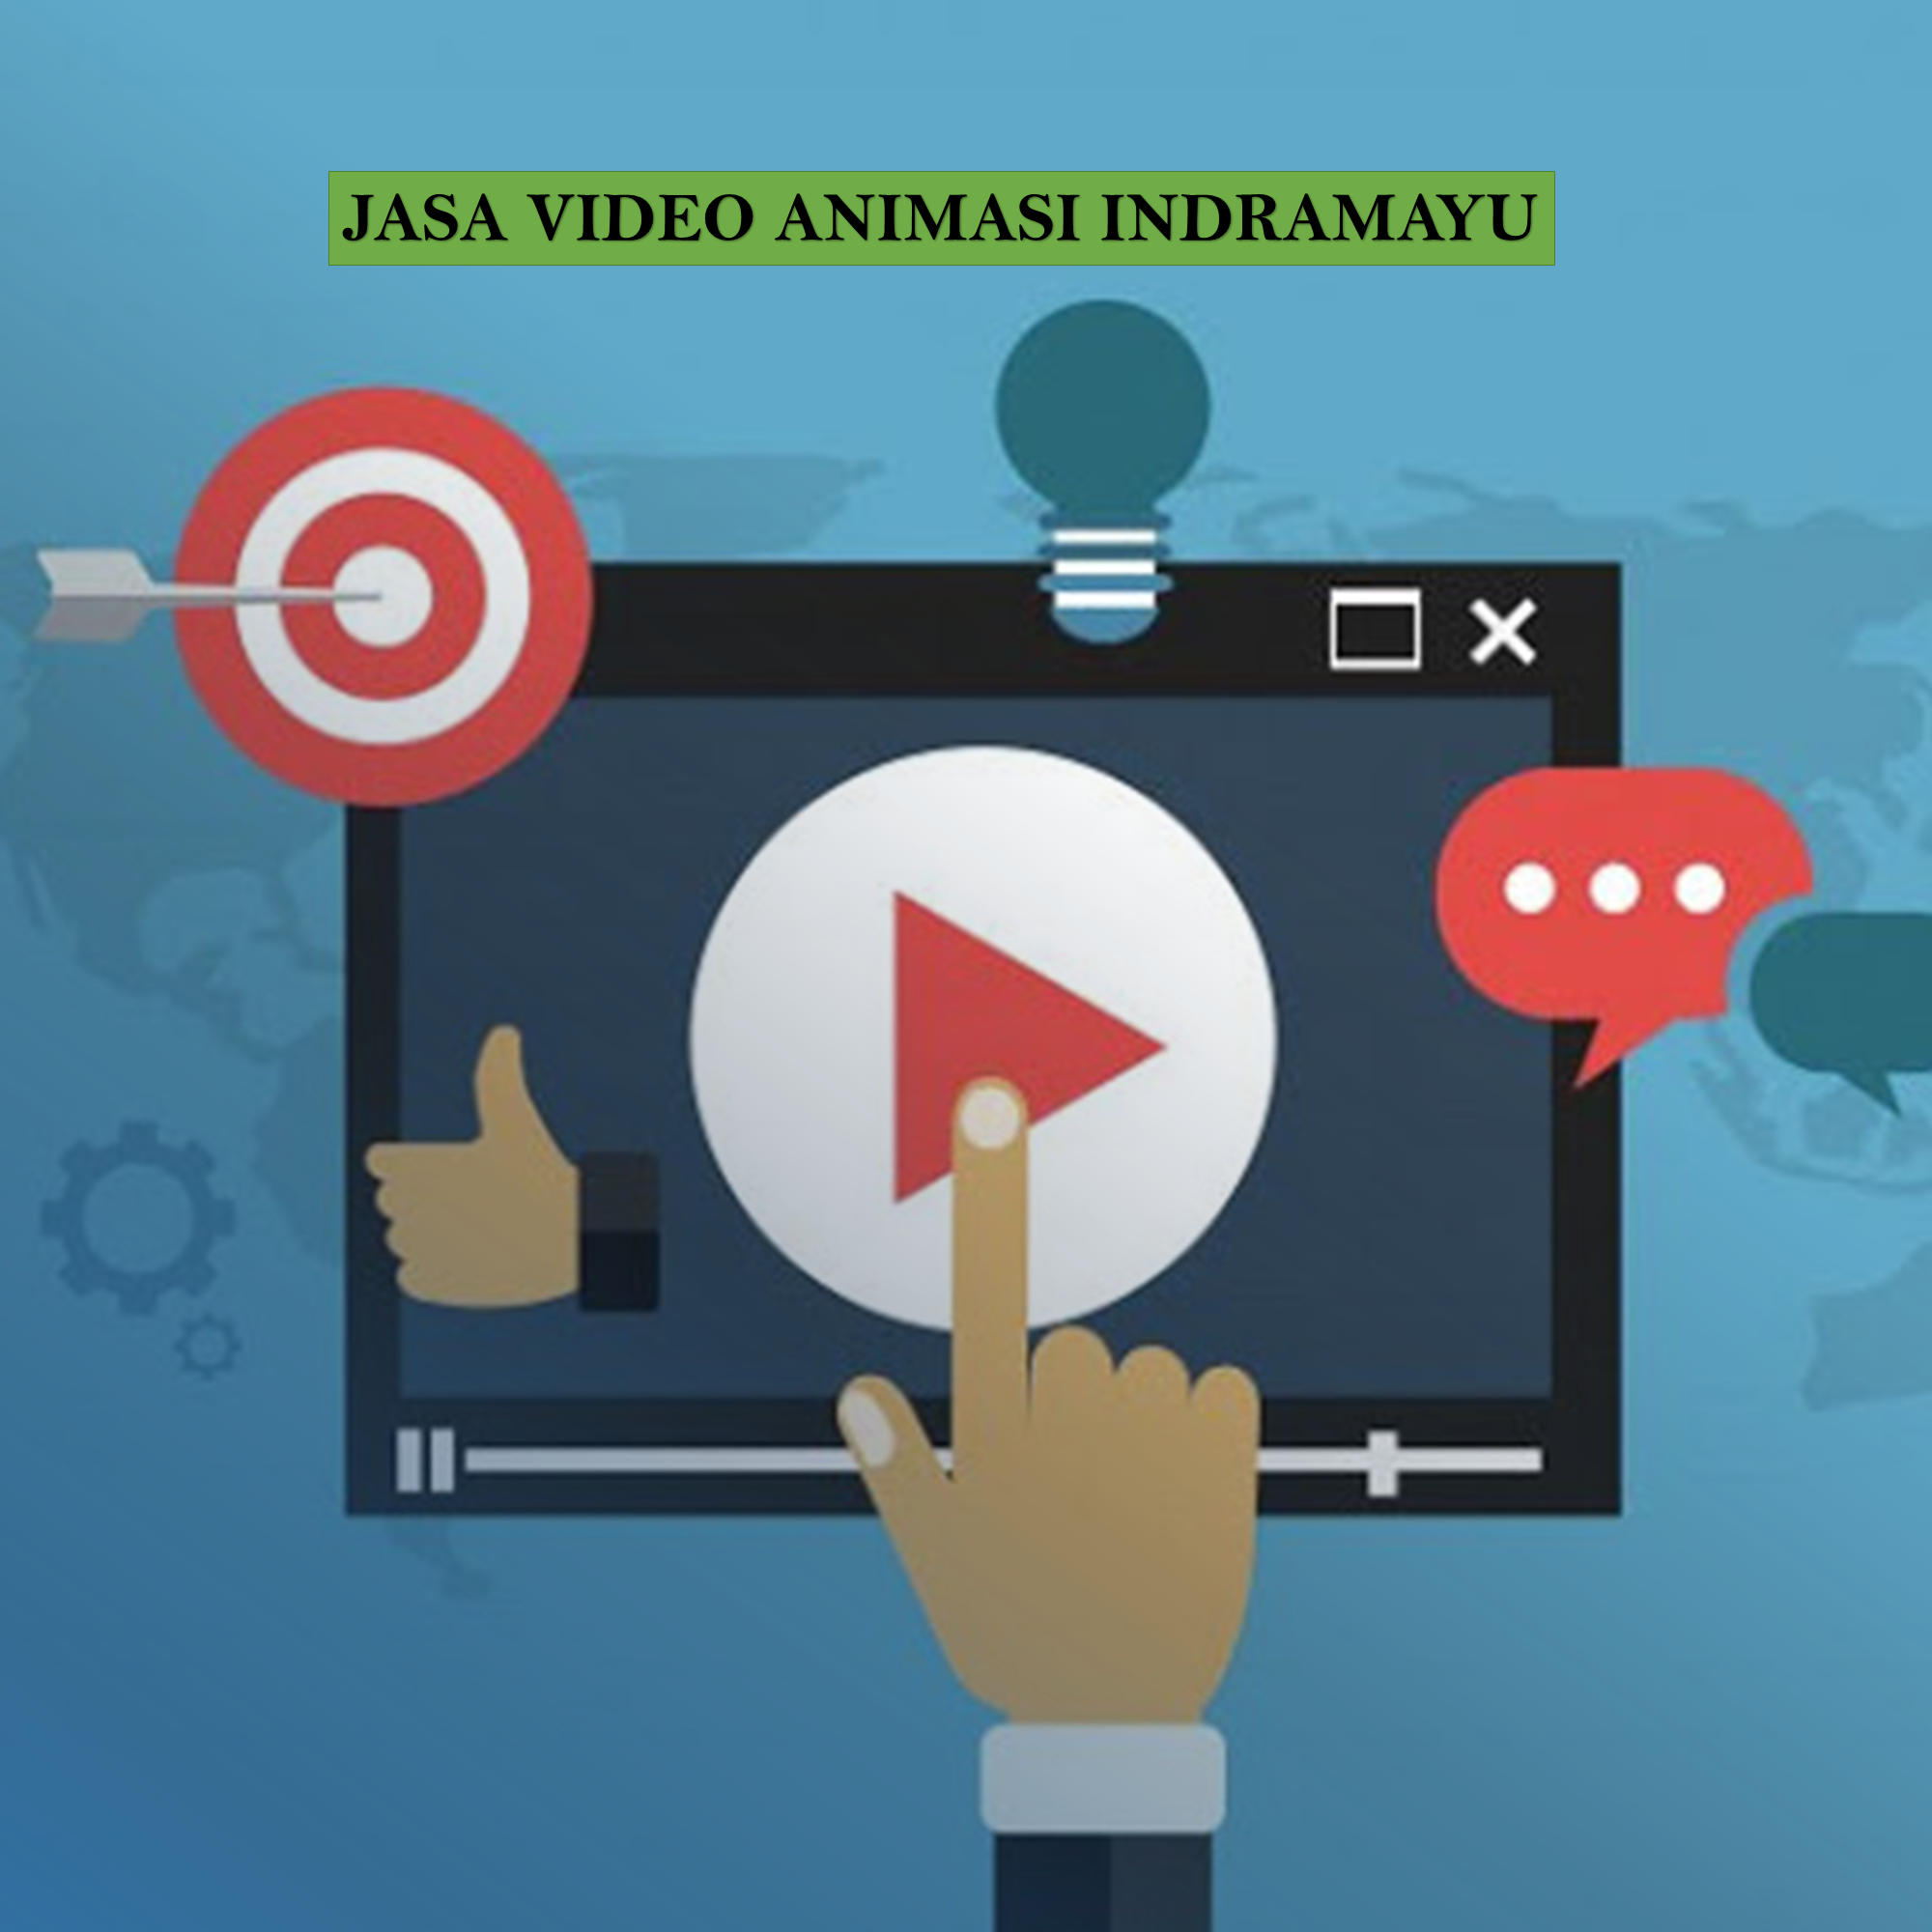 Video animasi Indramayu